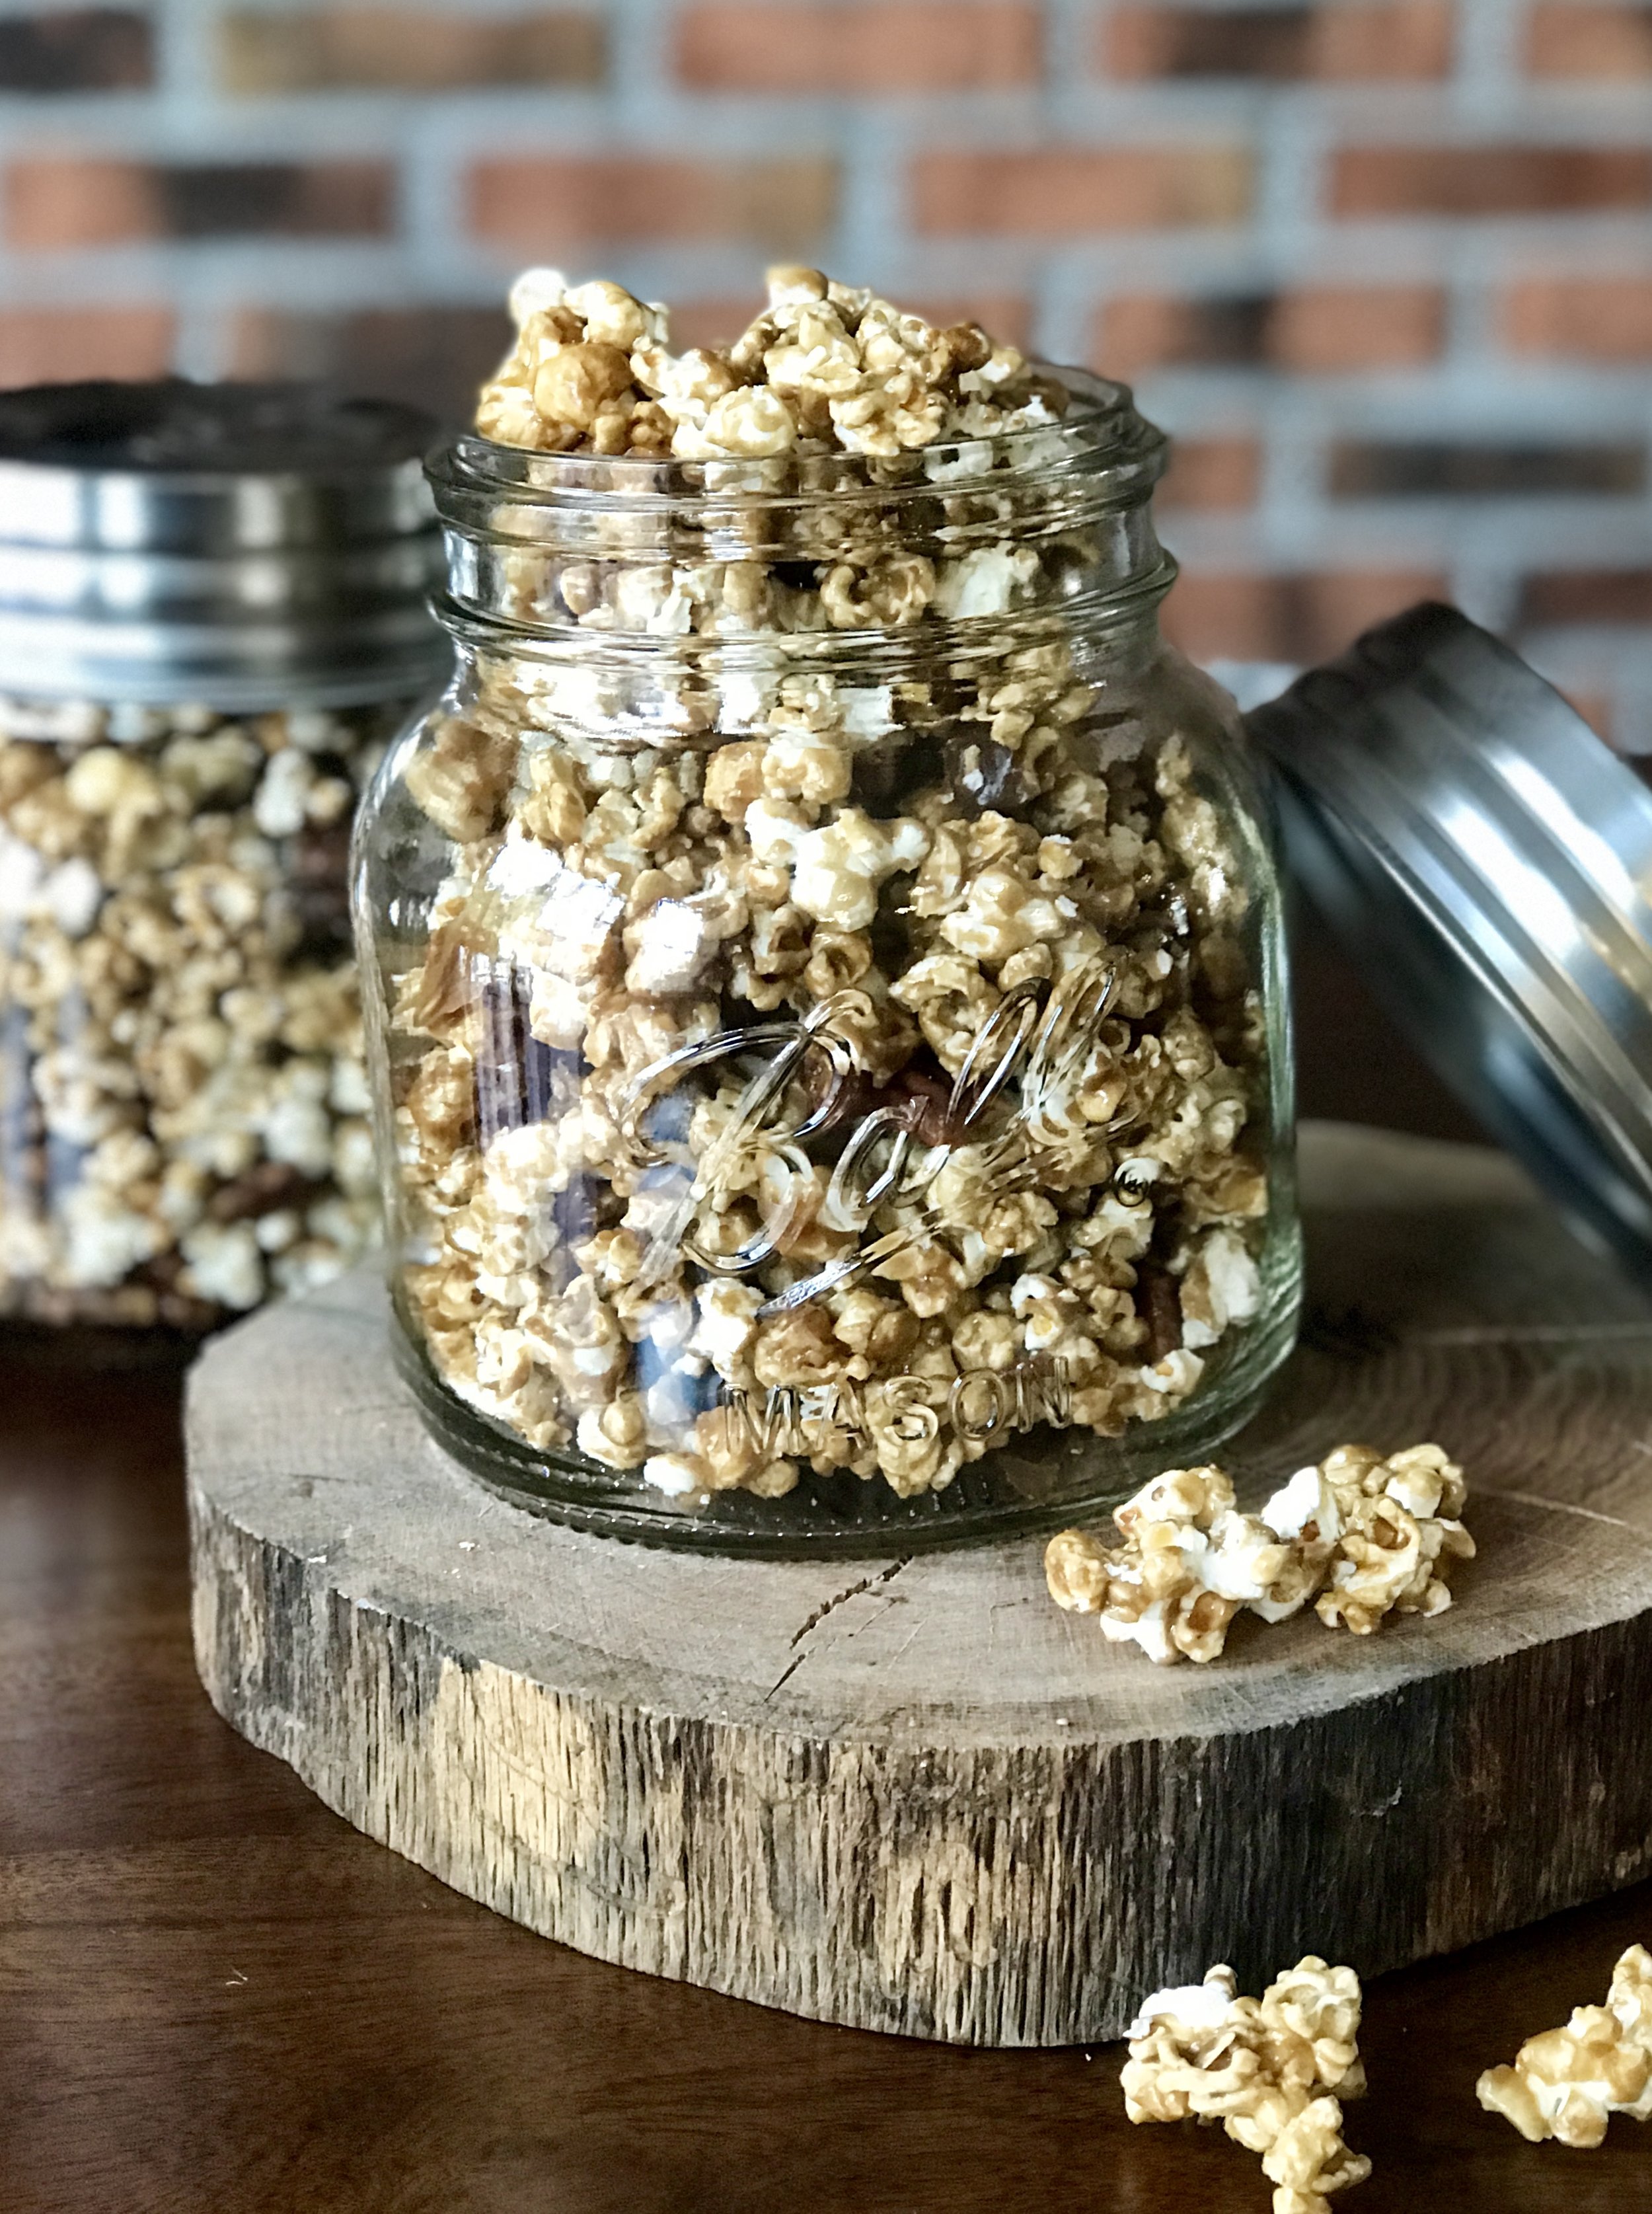 Stovetop Popcorn Recipe - The Gracious Wife